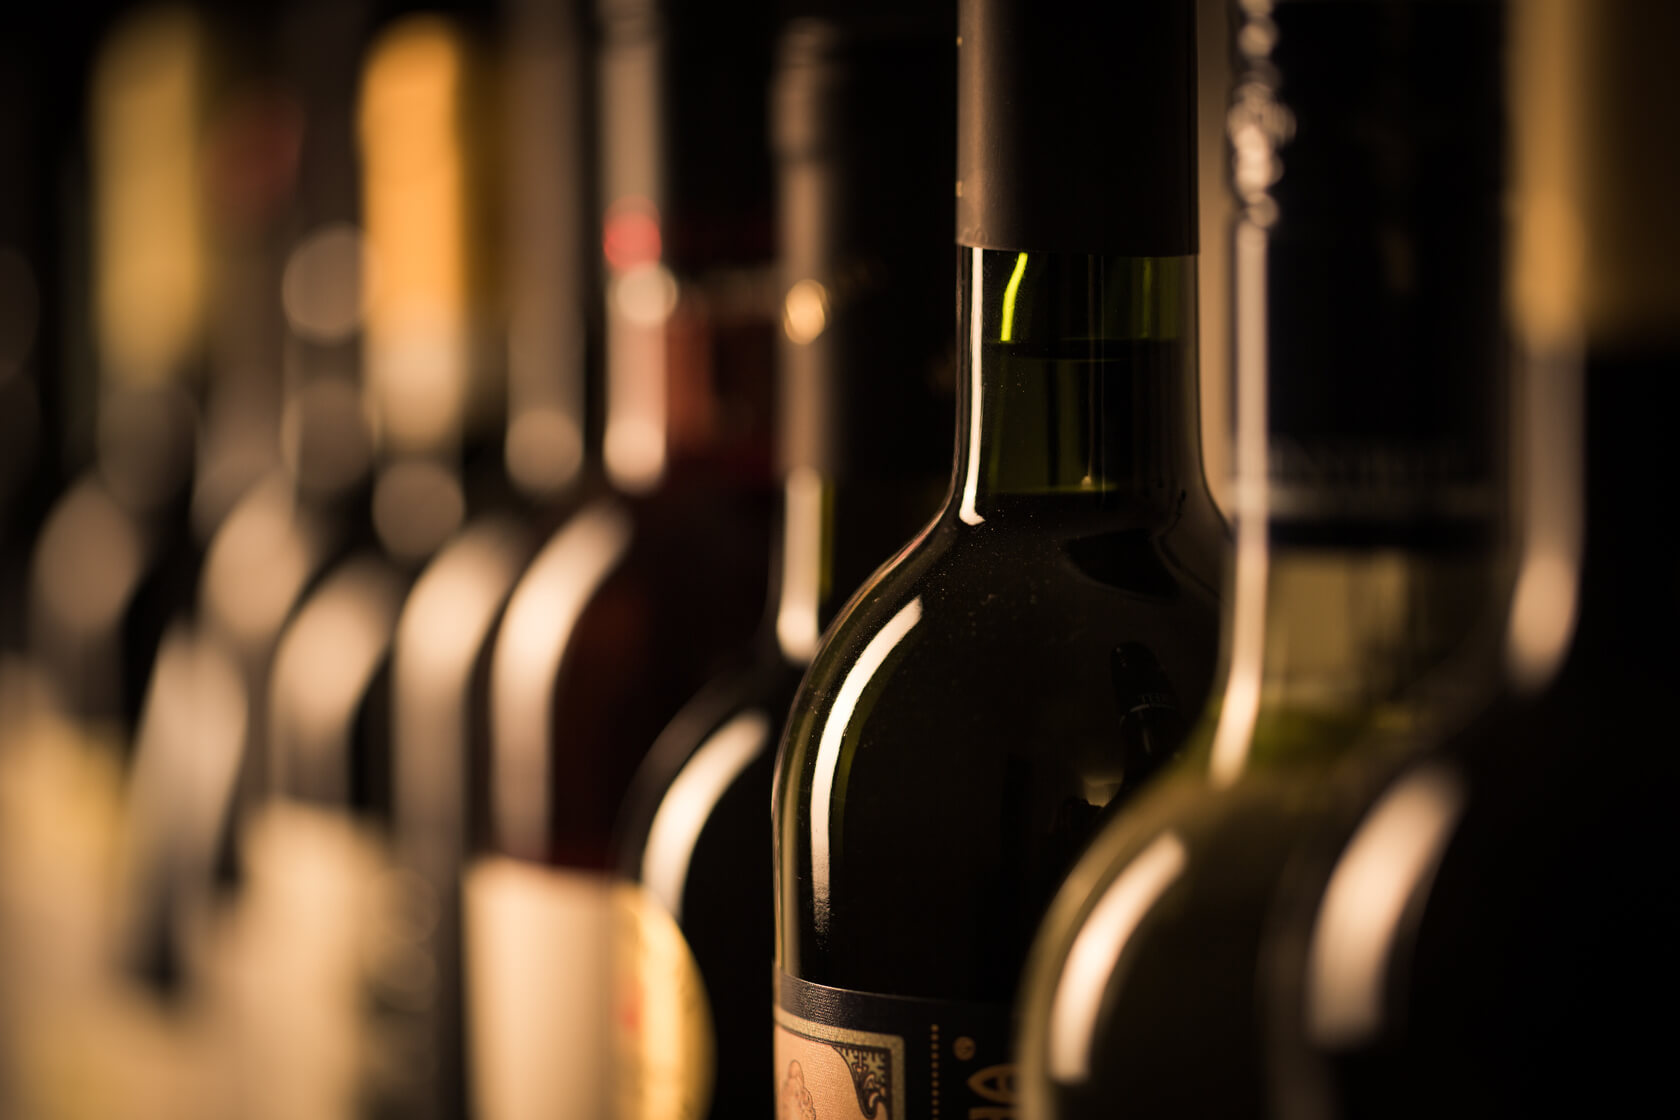 wine, bottles, Italy, red wine, beverage, cuisine